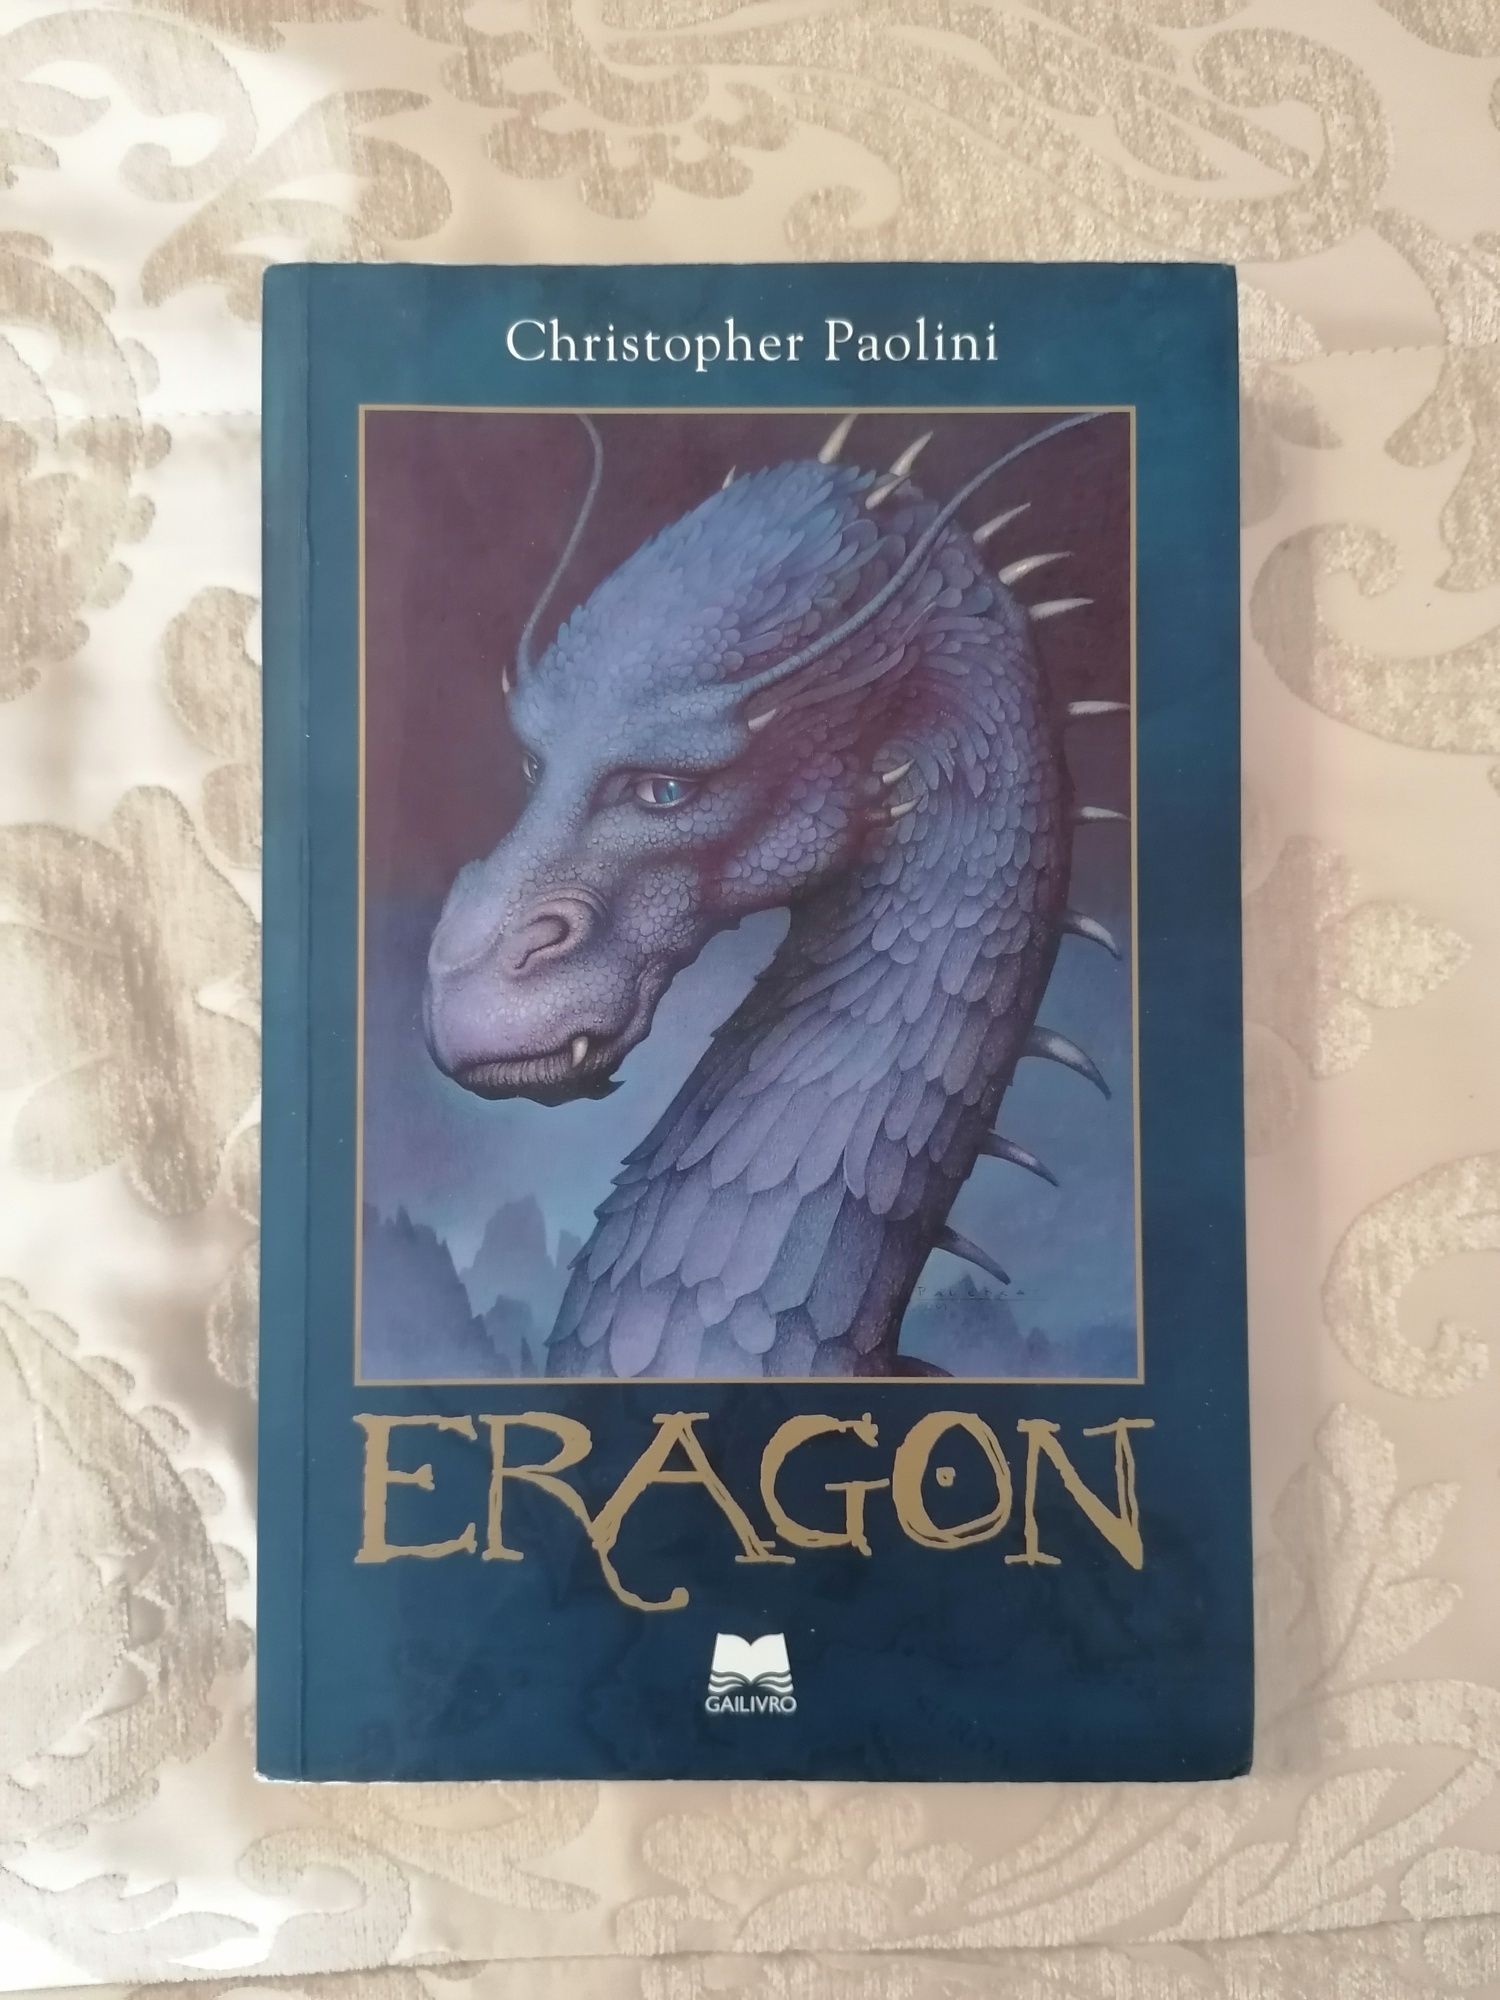 Livro Eragon de Christopher Paolini